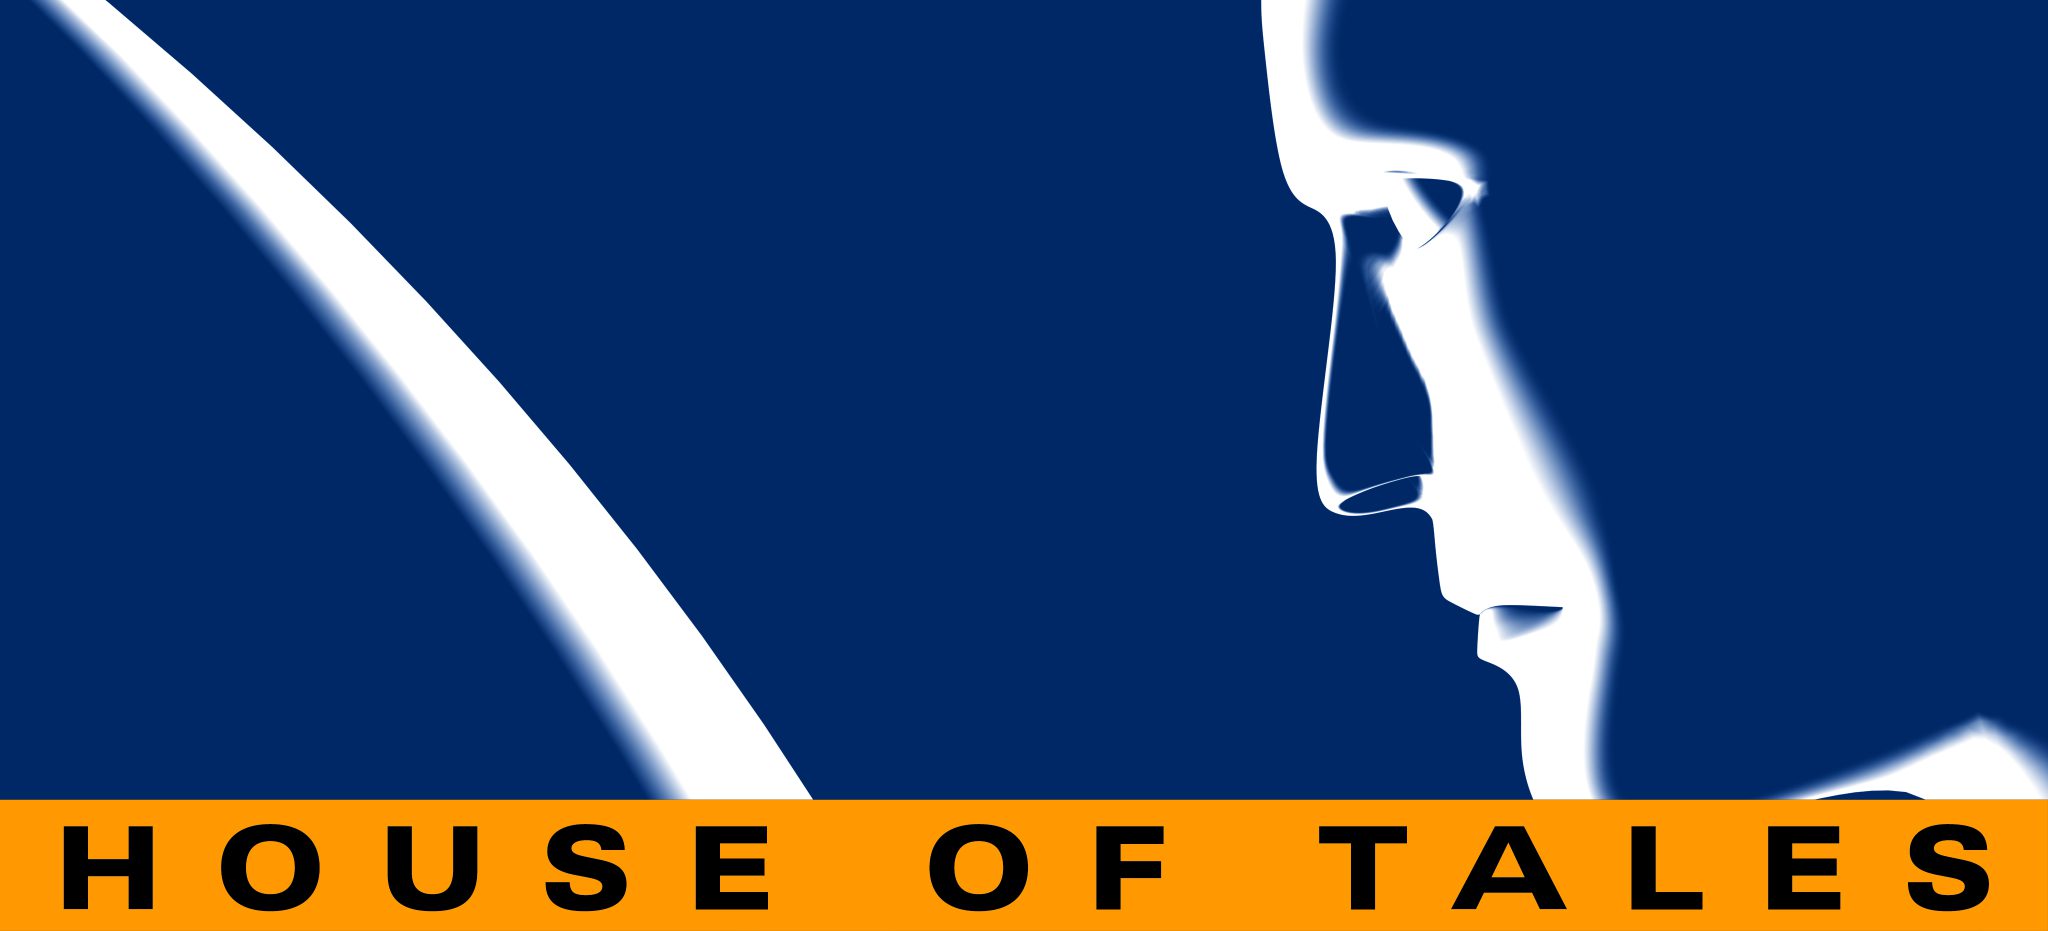 House of Tales: O privire de ansamblu asupra companiei